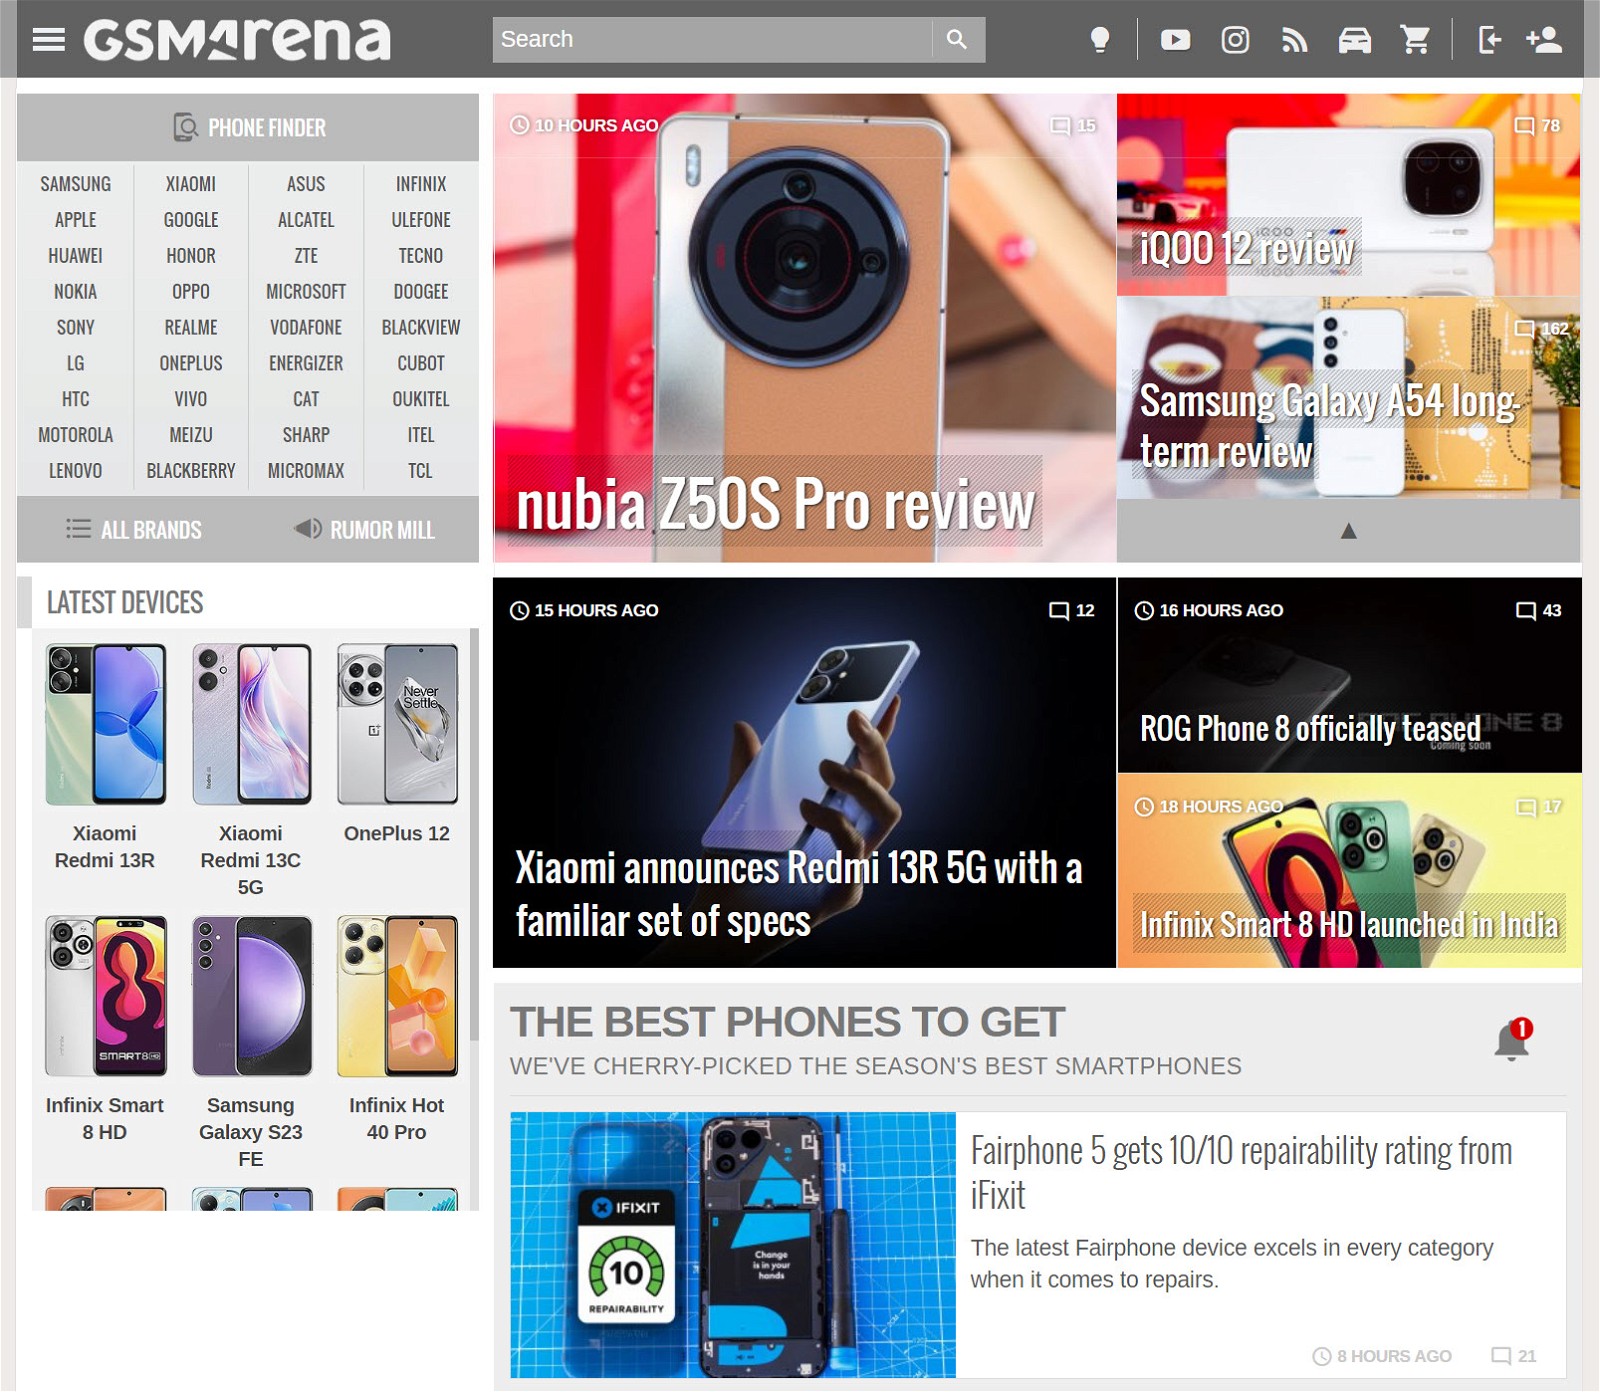 GSM Arena homepage